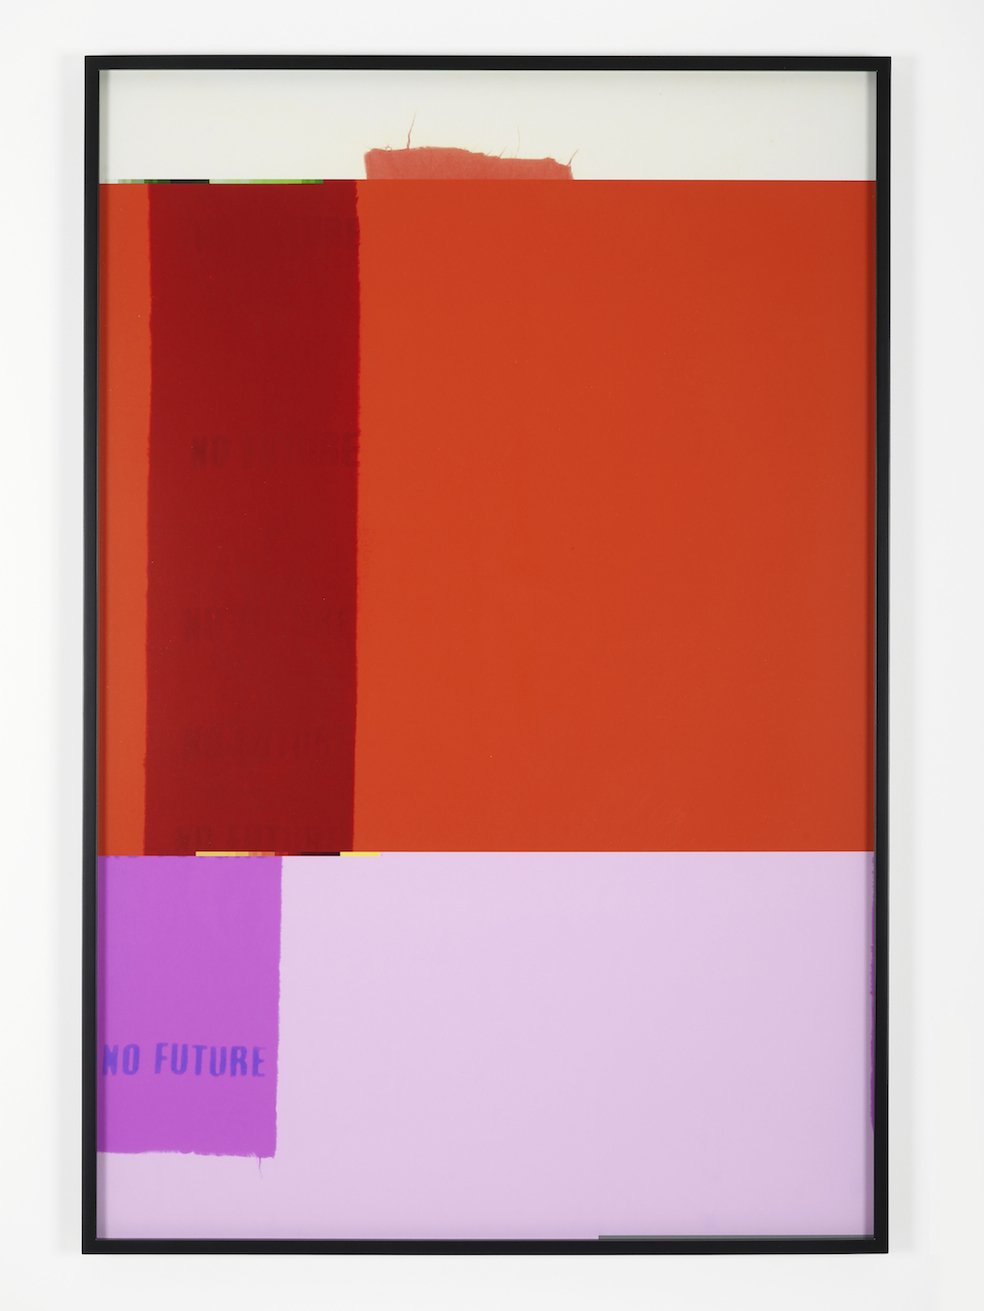     Nick Relph RY #4 2014 Archival Pigment Print 106.6 x 71.1 cm / 42 x 28 in 